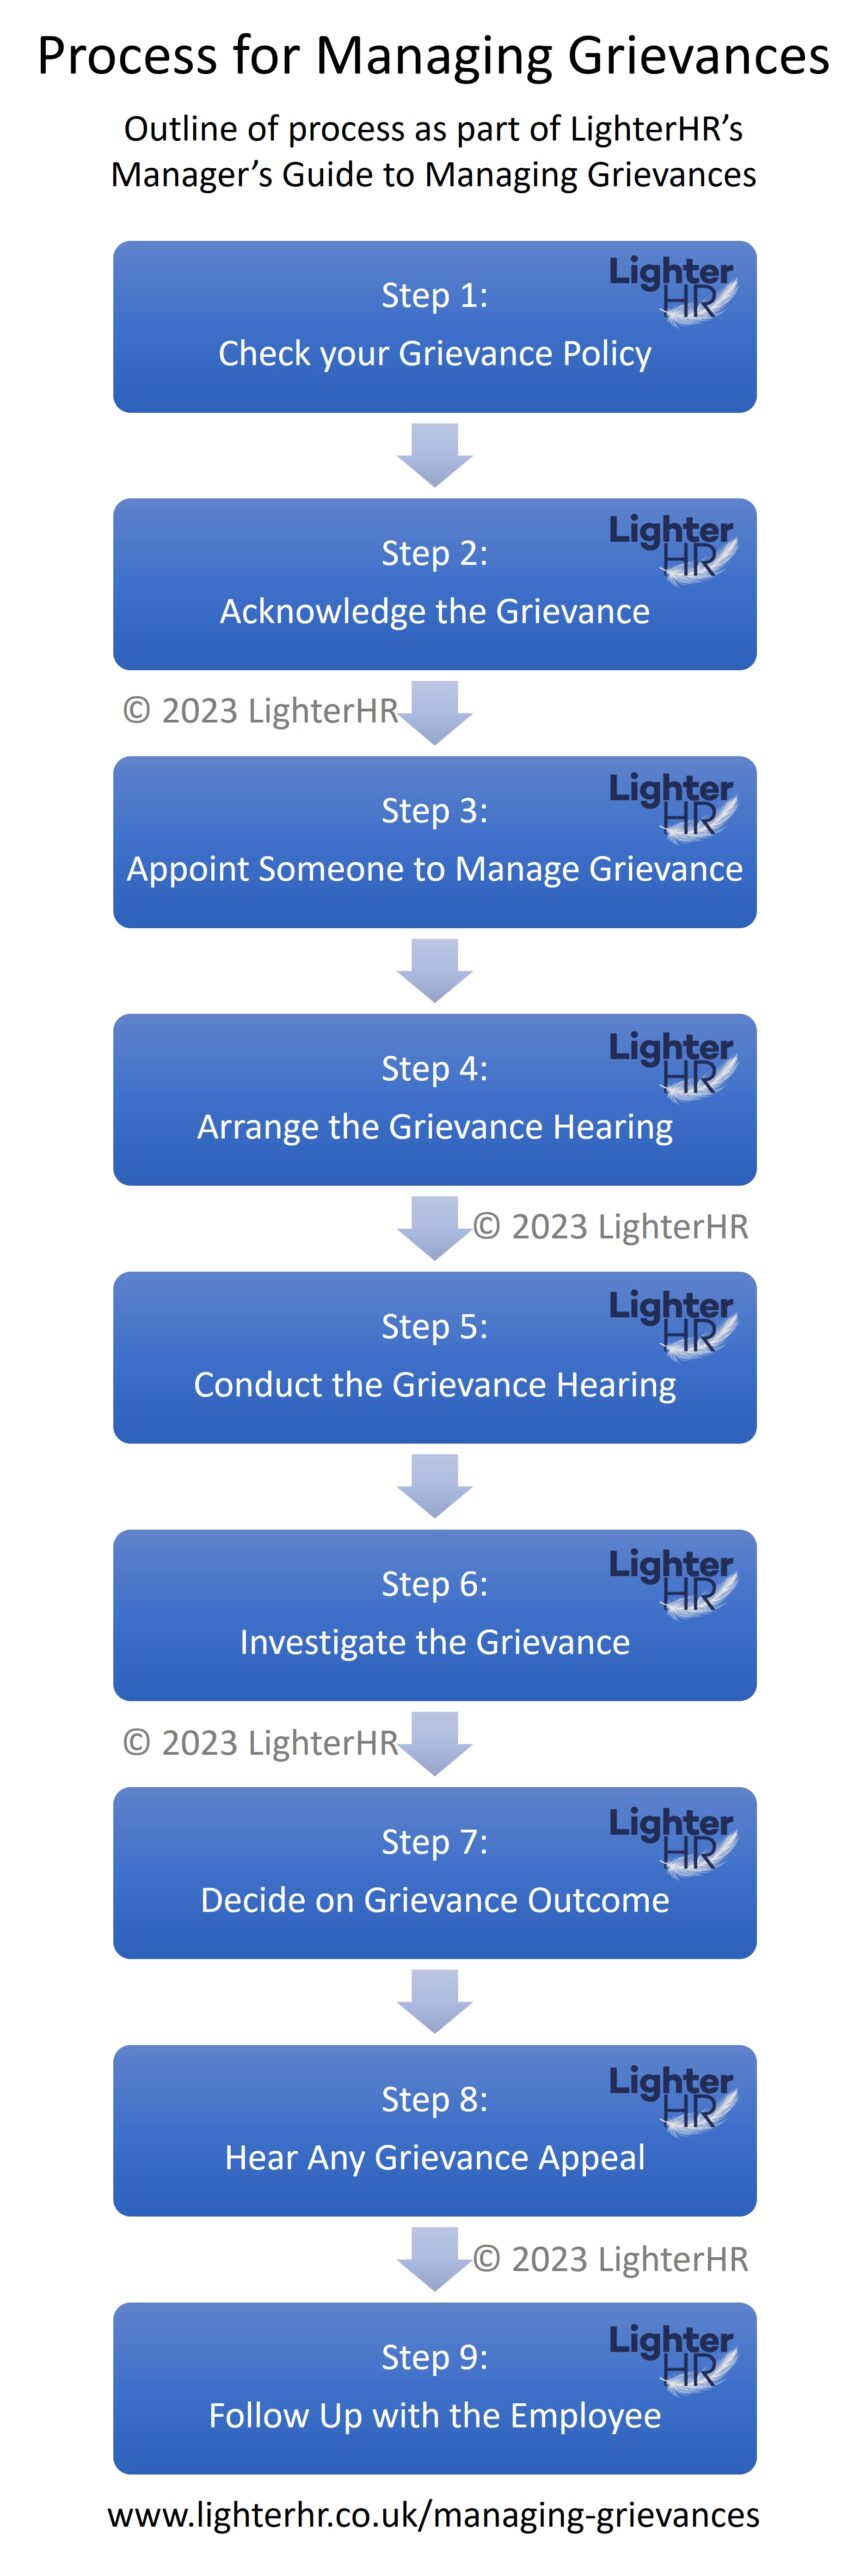 Process for Managing Grievances (mobile) - LighterHR